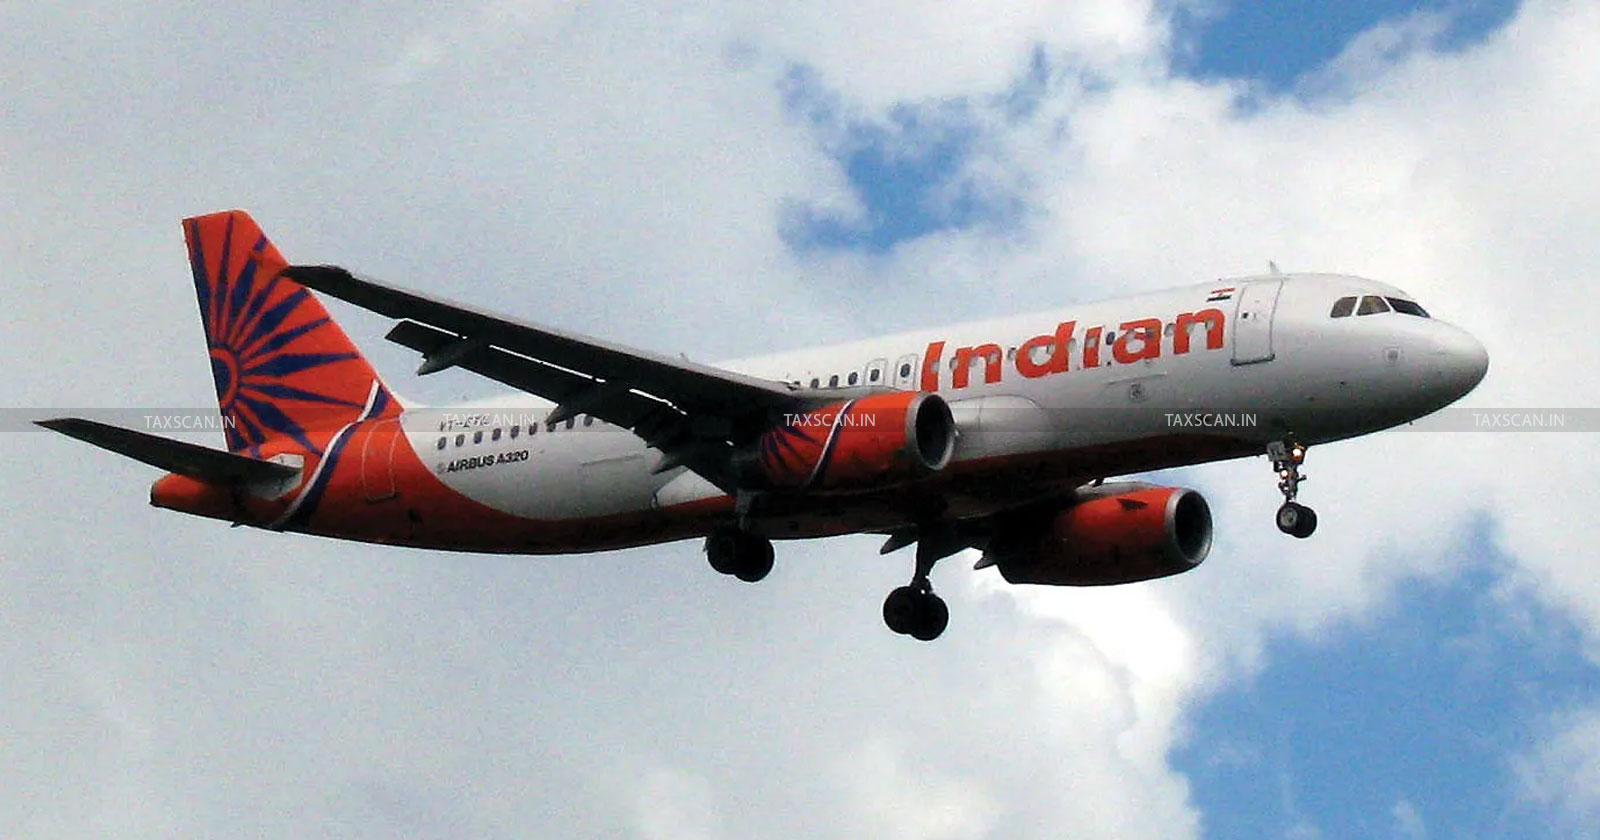 CESTAT - CESTAT Delhi - Indian Airlines - Freight Insurance - taxscan